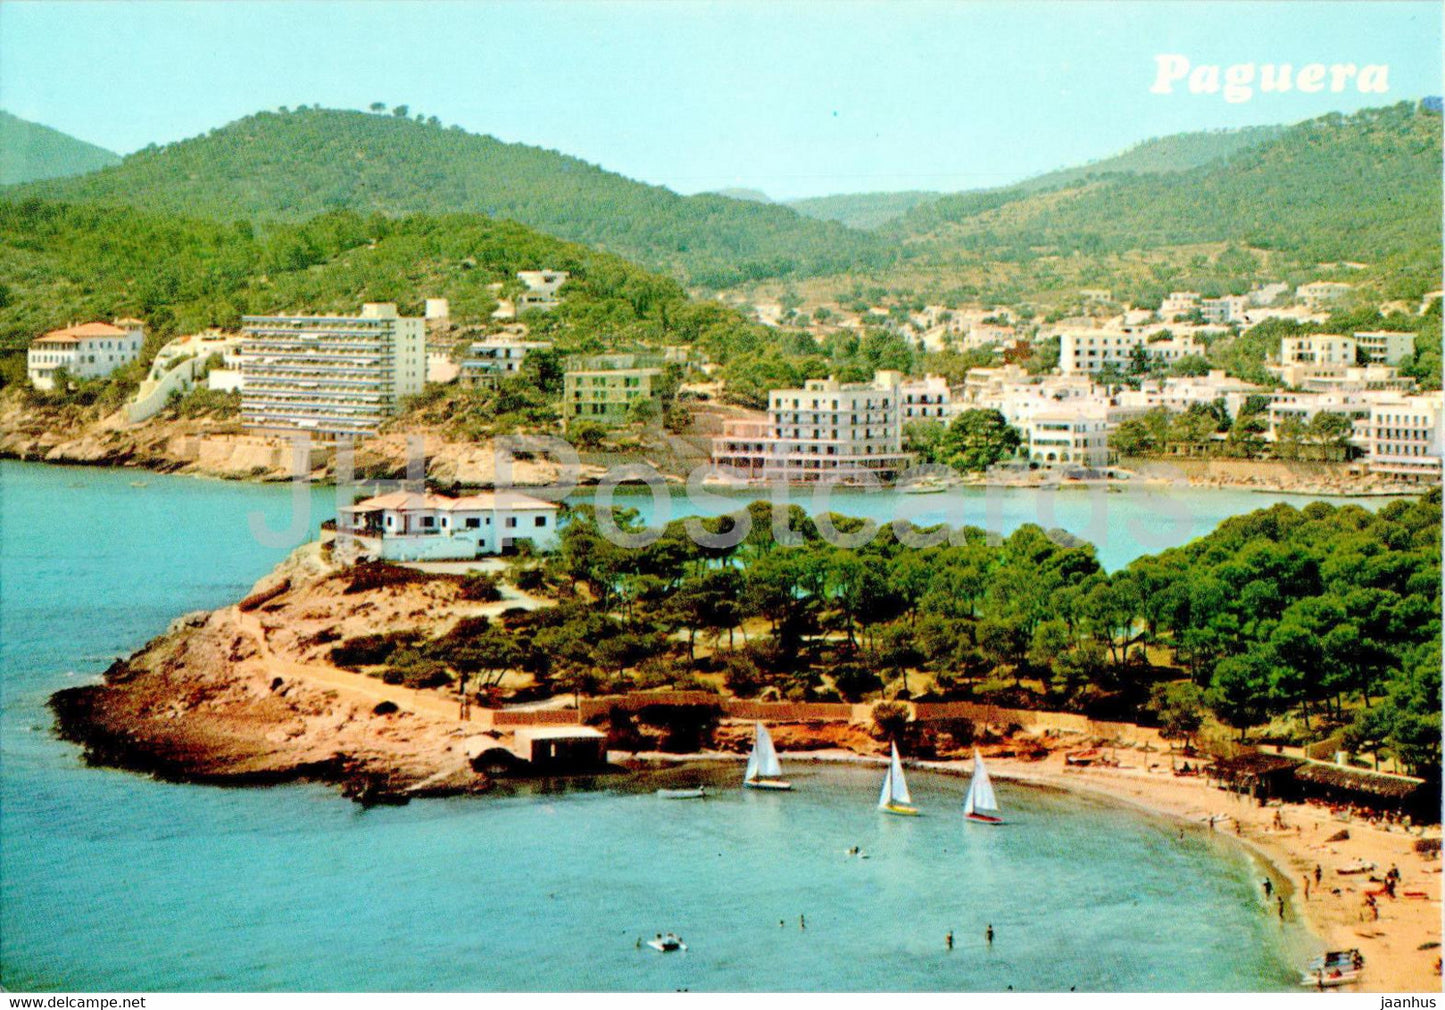 Paguera - Vista Parcial - 1294 - Spain - unused - JH Postcards